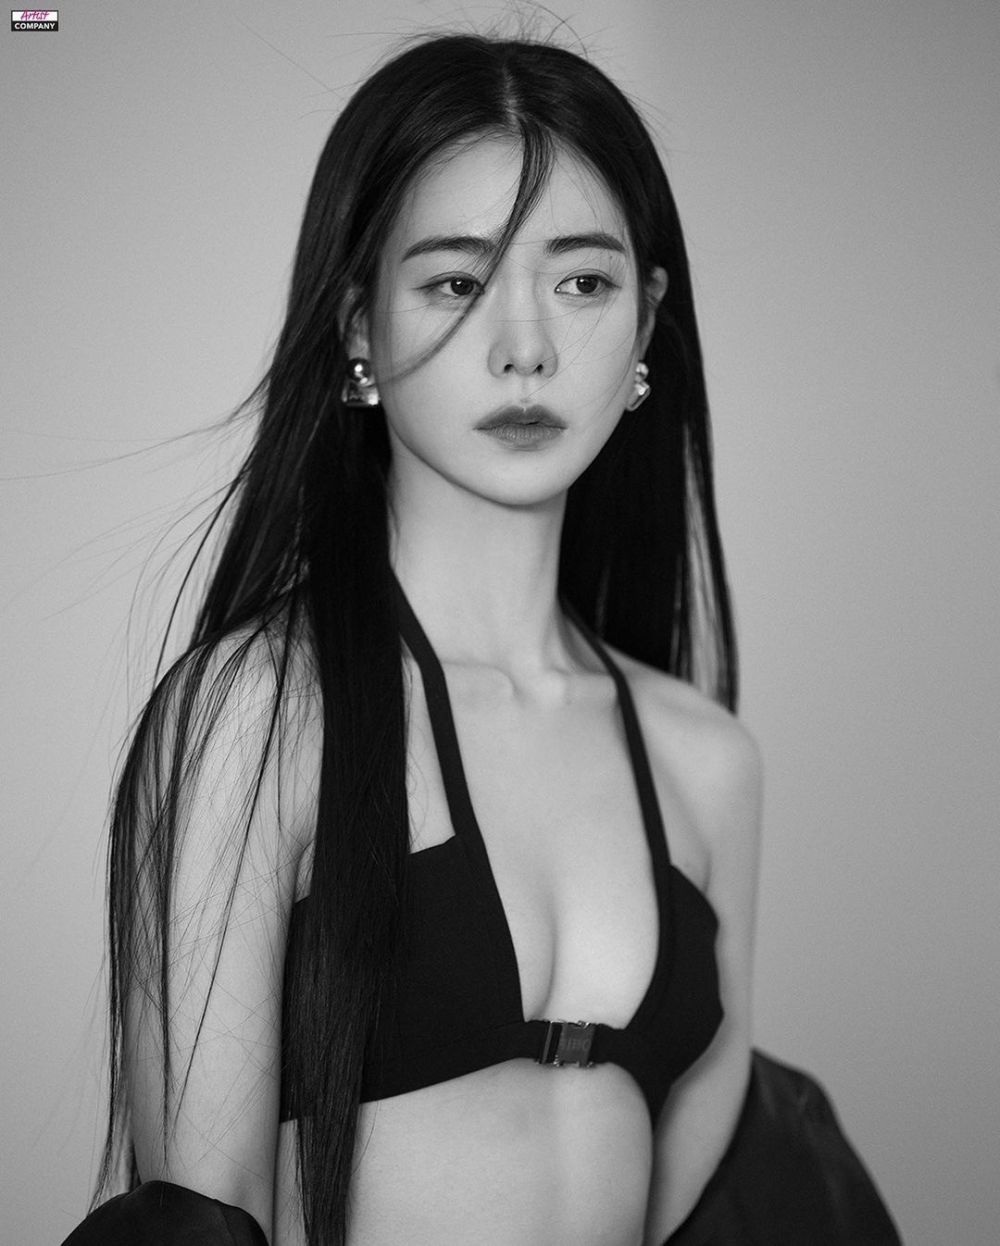 Ji-Yeon Lim Sexy and Hottest Photos , Latest Pics